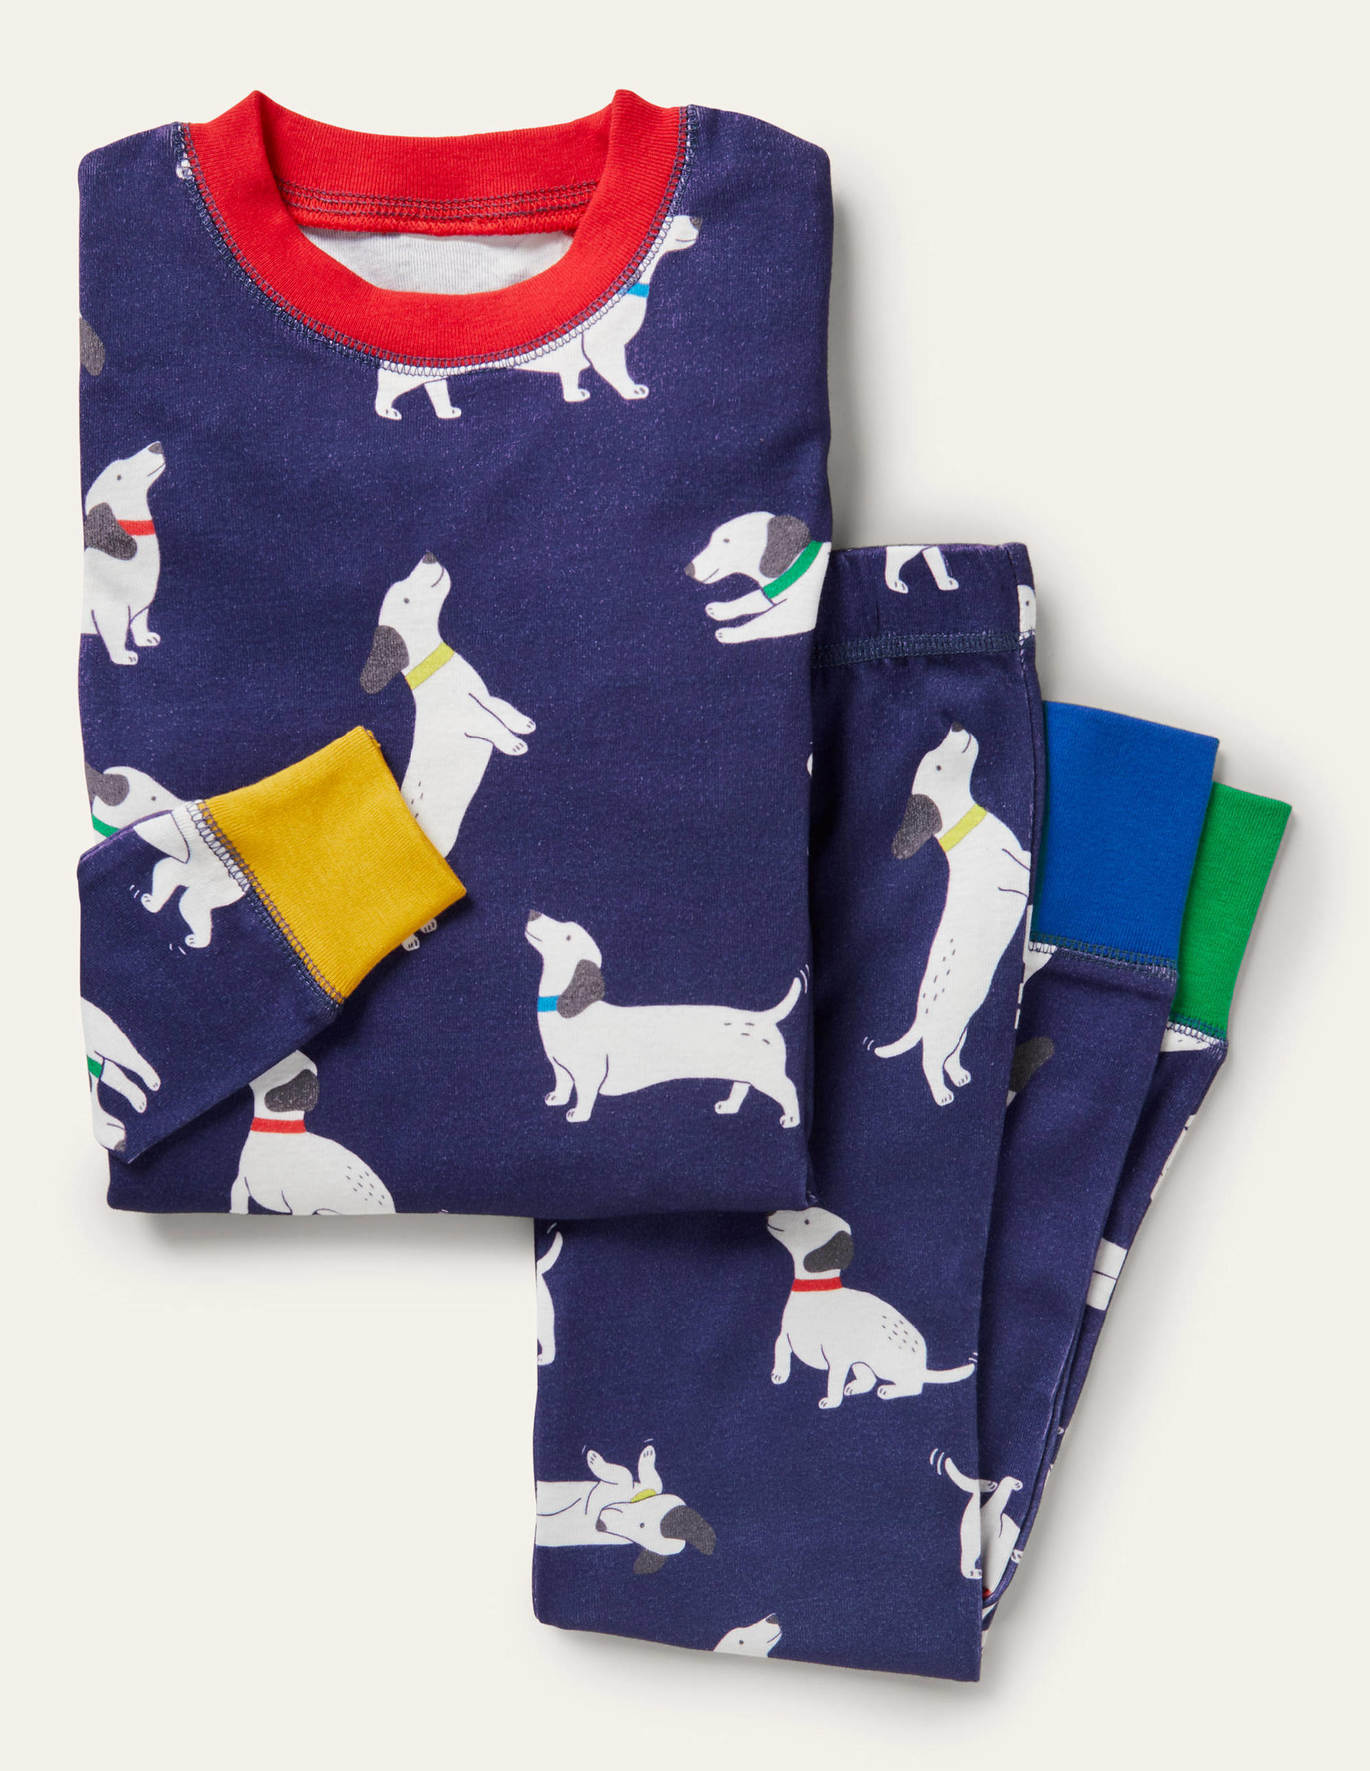 Boden Snug Glow-in-the-dark Pajamas - Starboard Blue Sausage Dogs